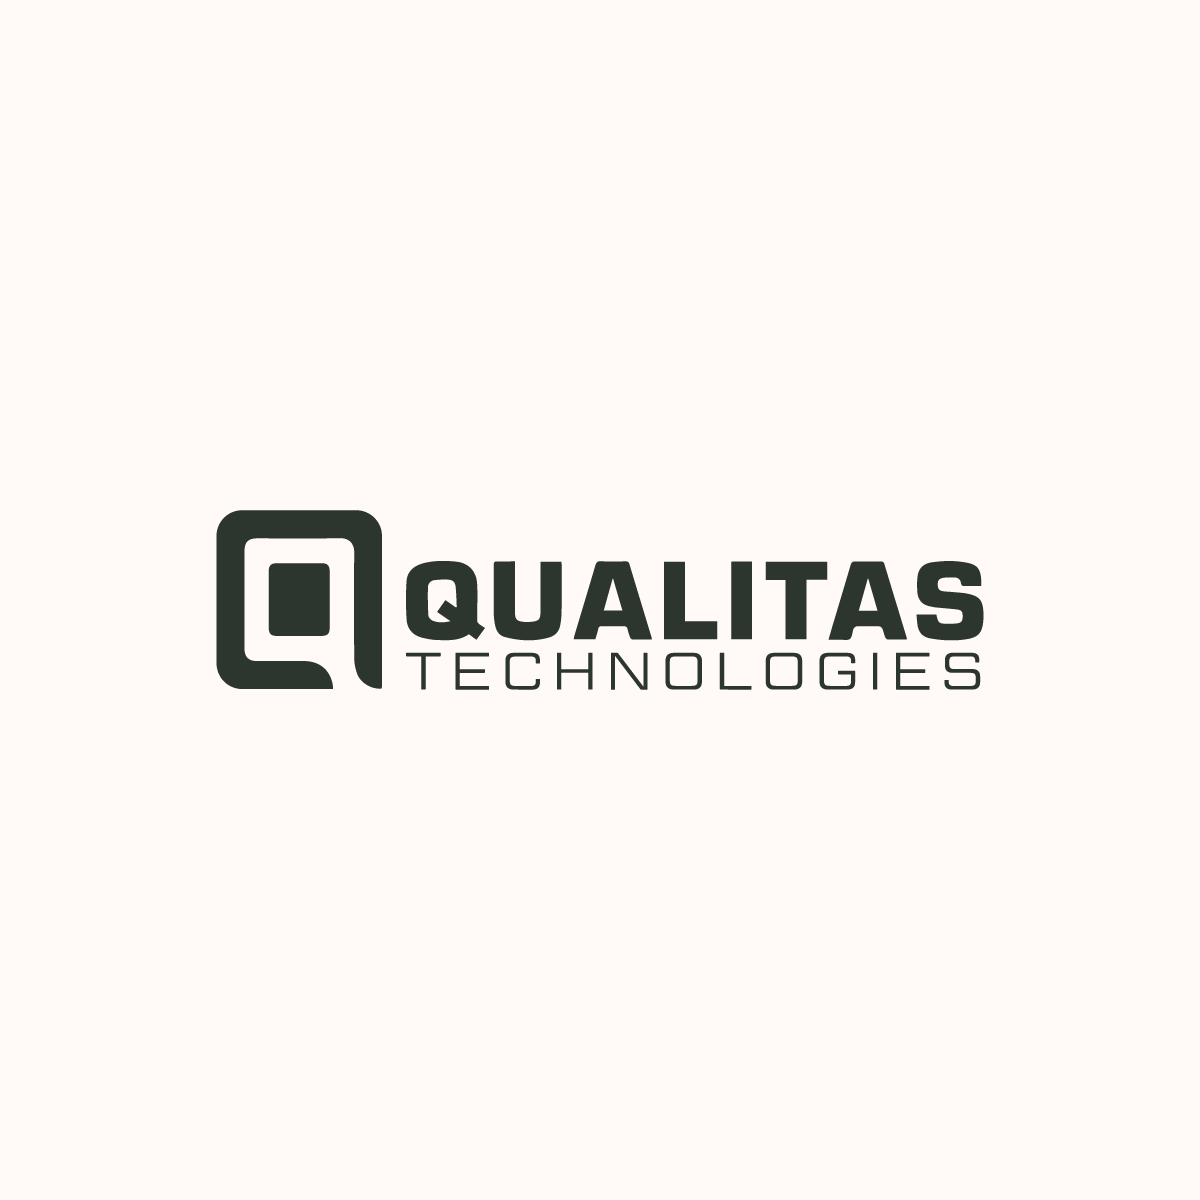 Qualitas Technologies